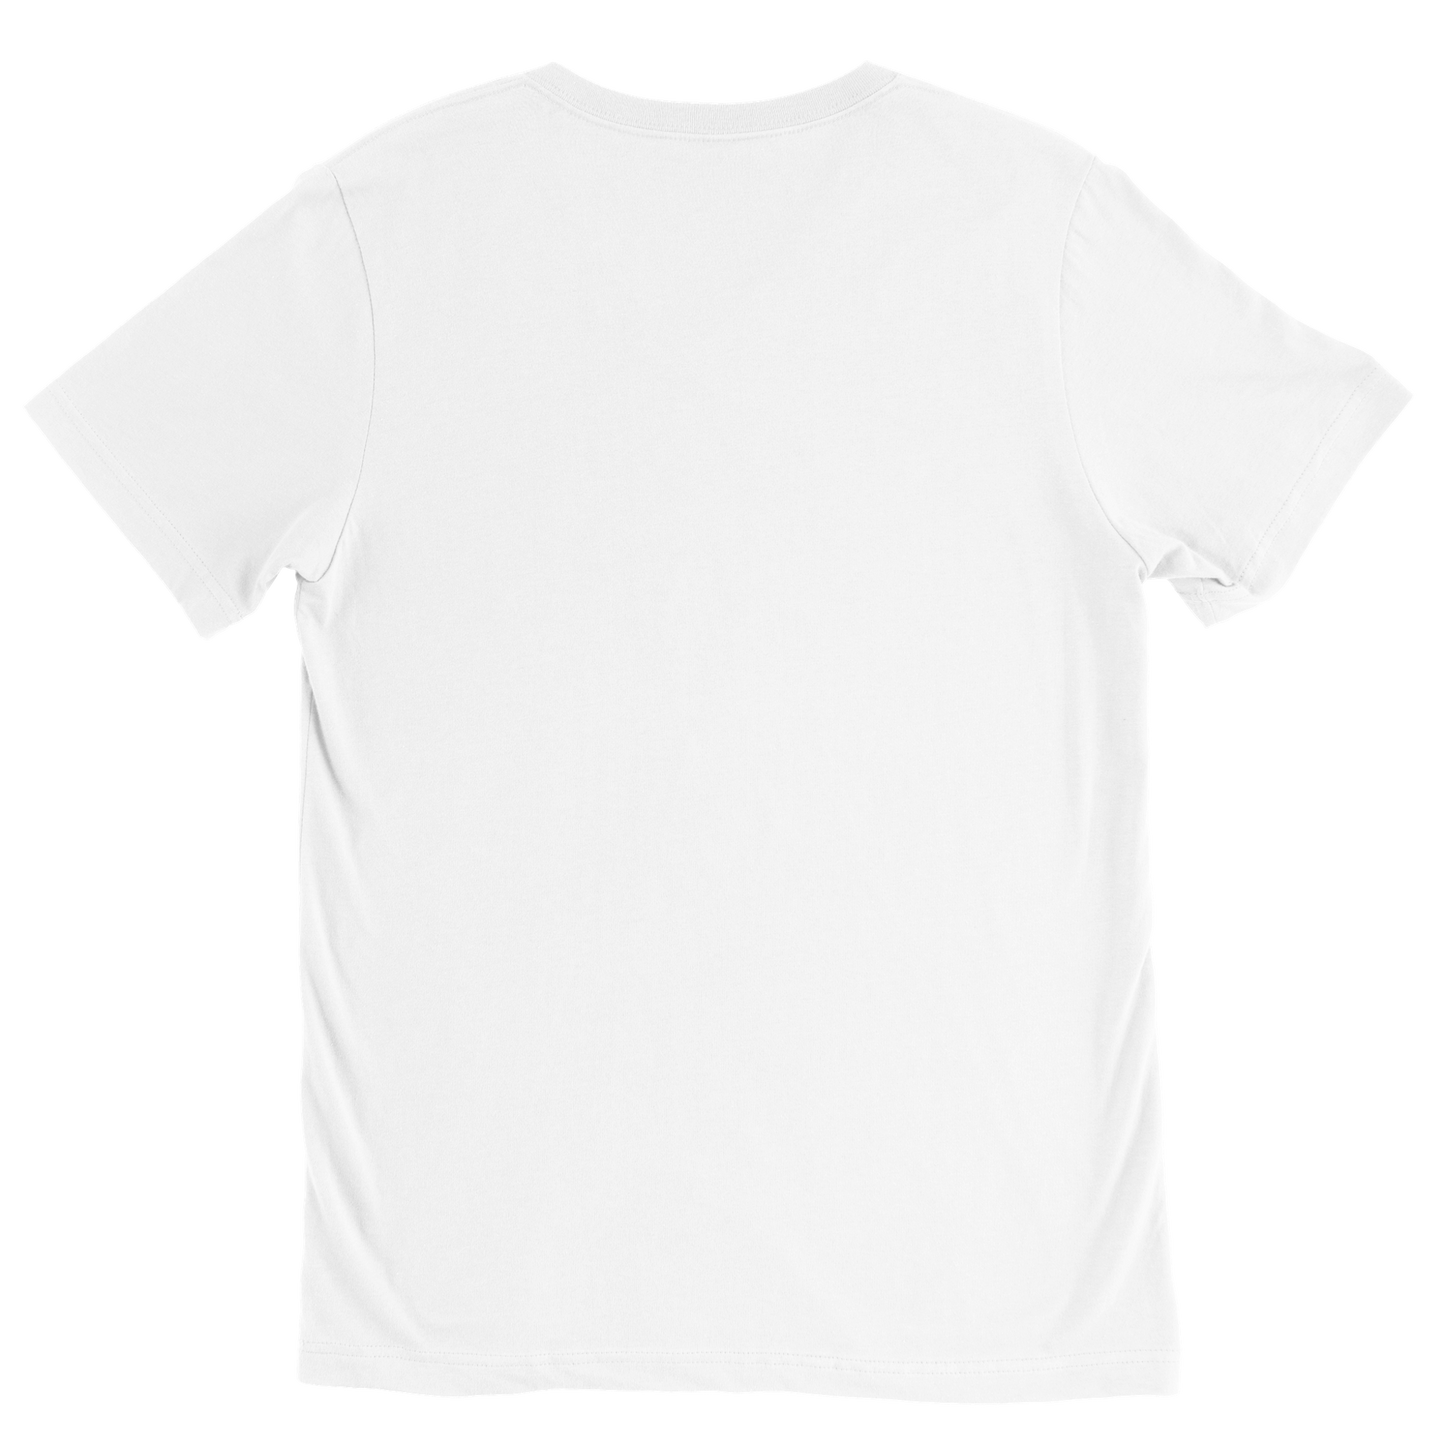 Arizona custom text Premium Unisex V-Neck T-shirt